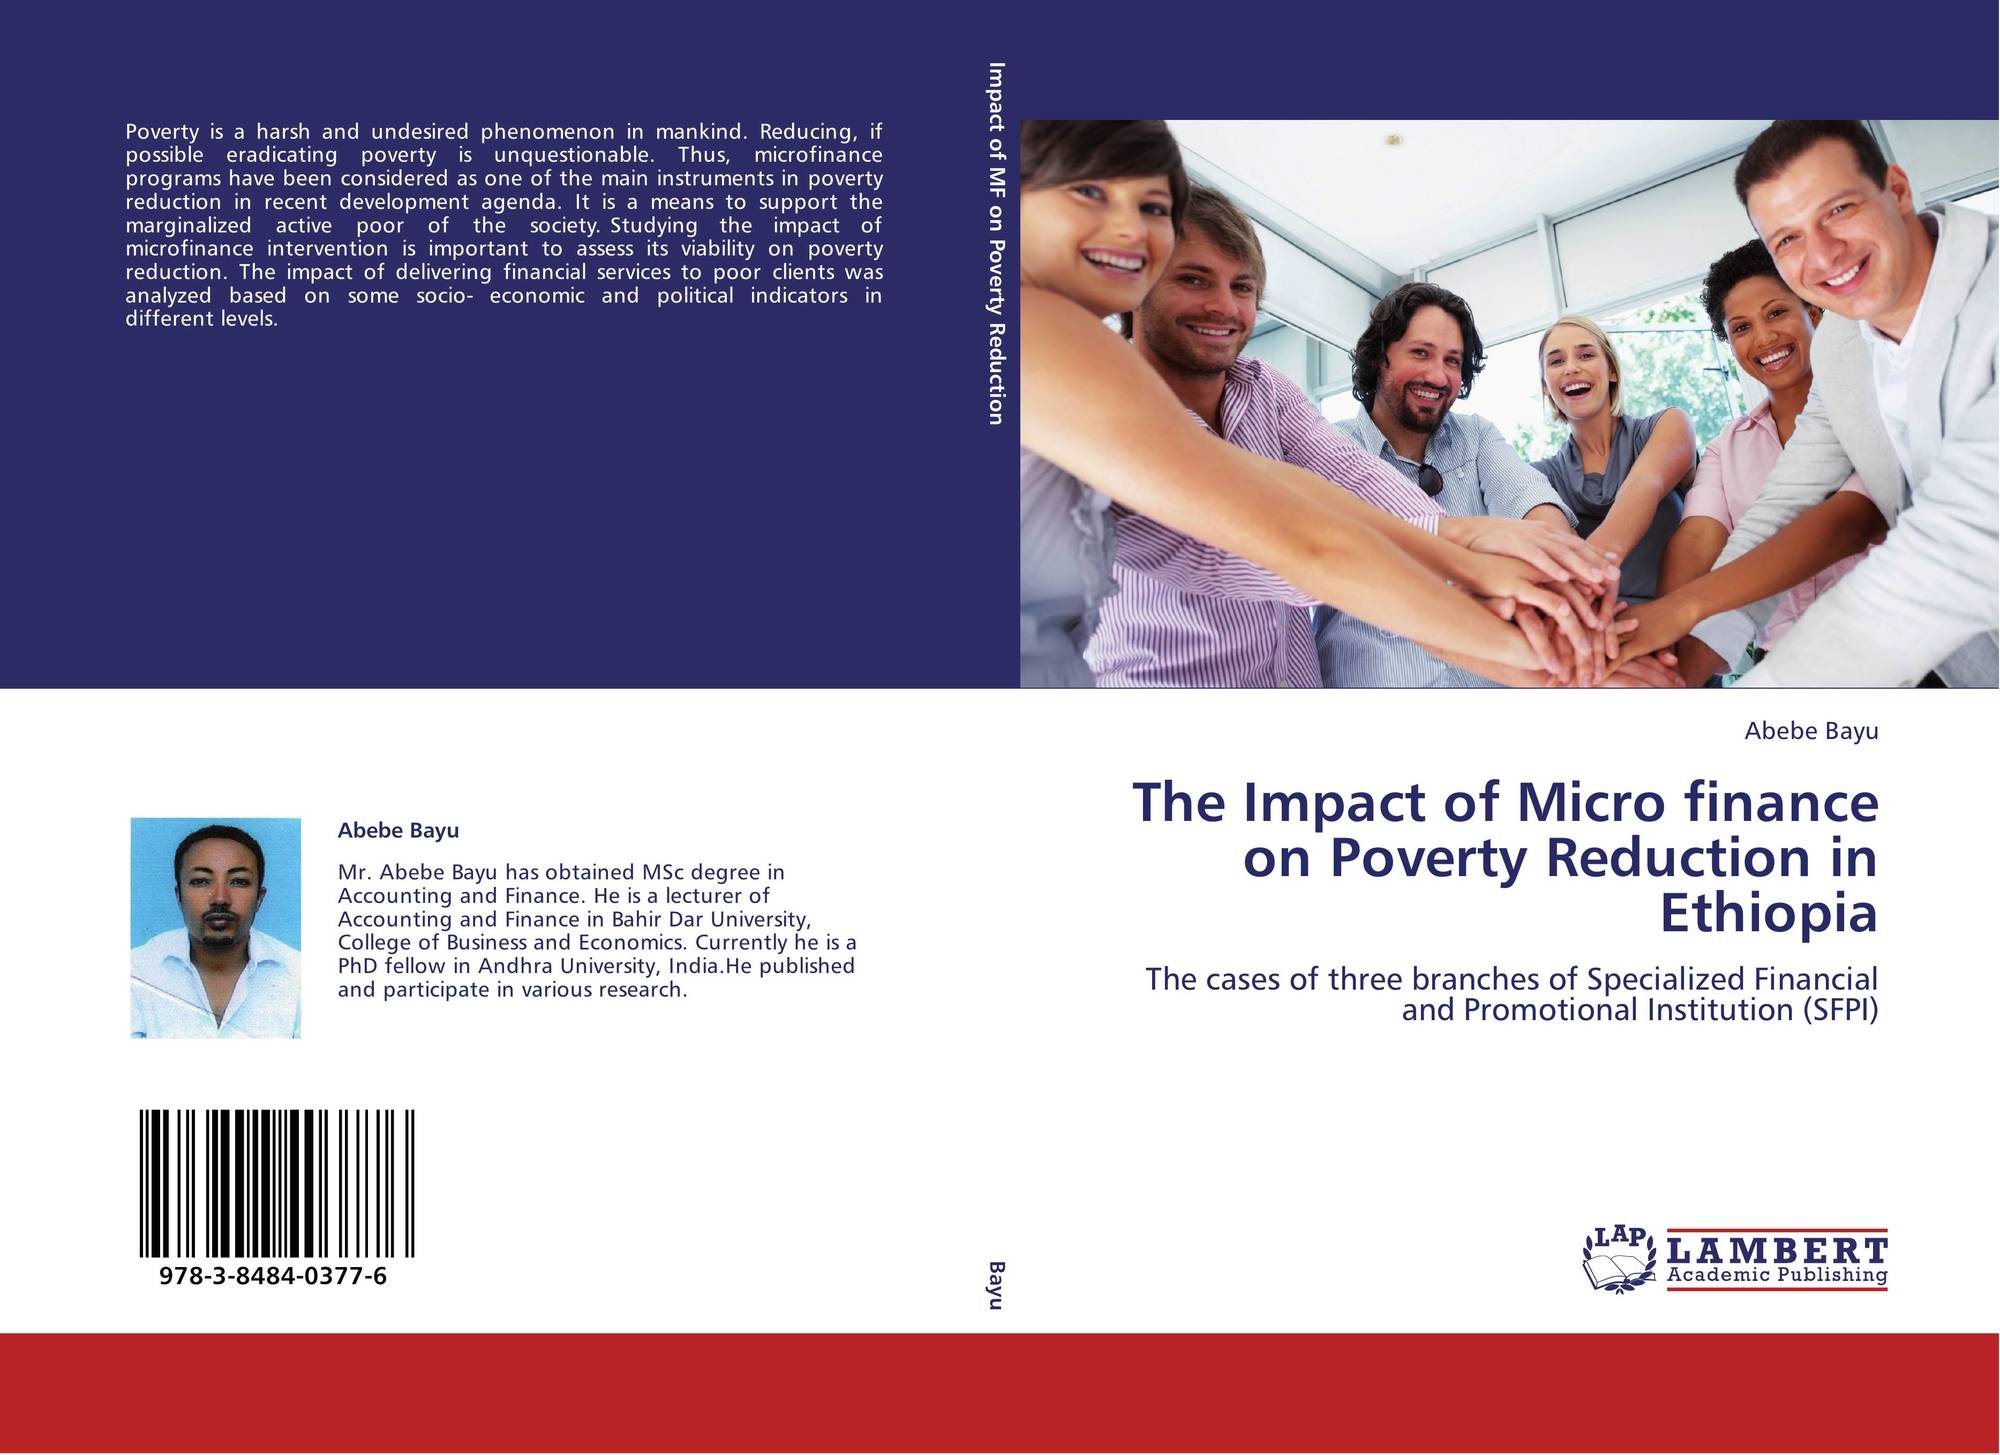 The Impact of Microfinance